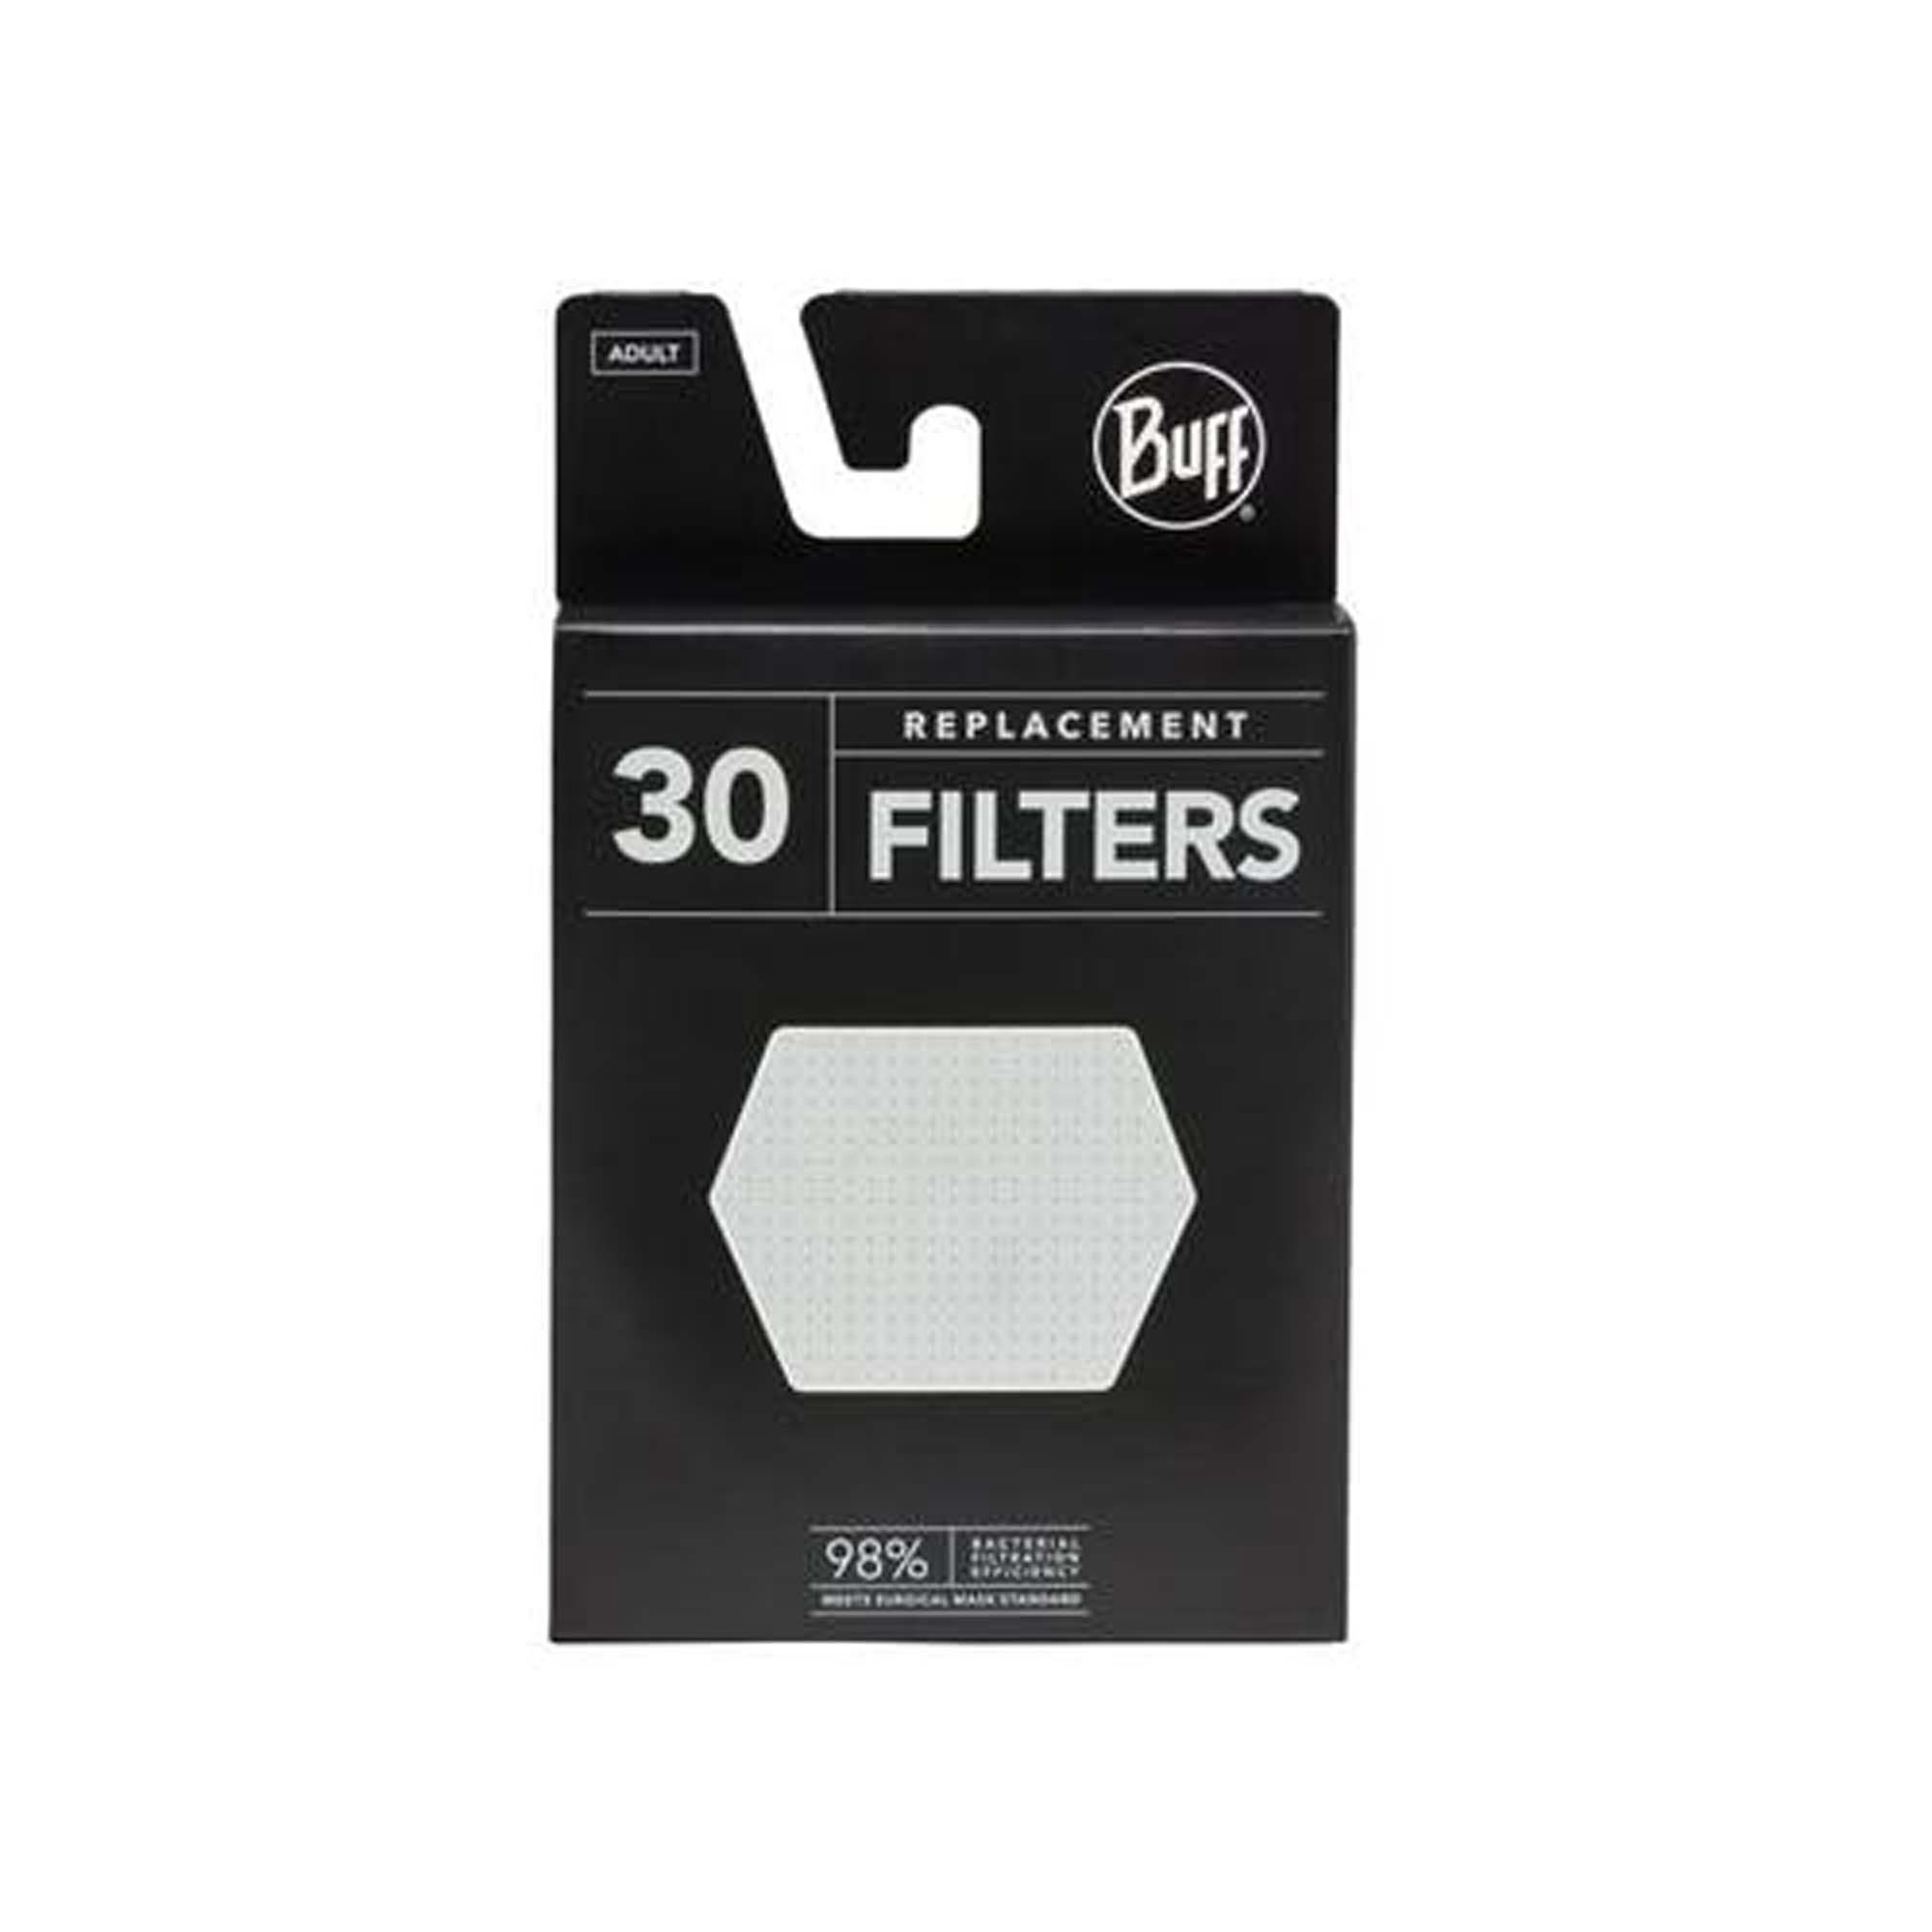 BUFF Refill Fm70-310 Filter 30 Pack Unisex